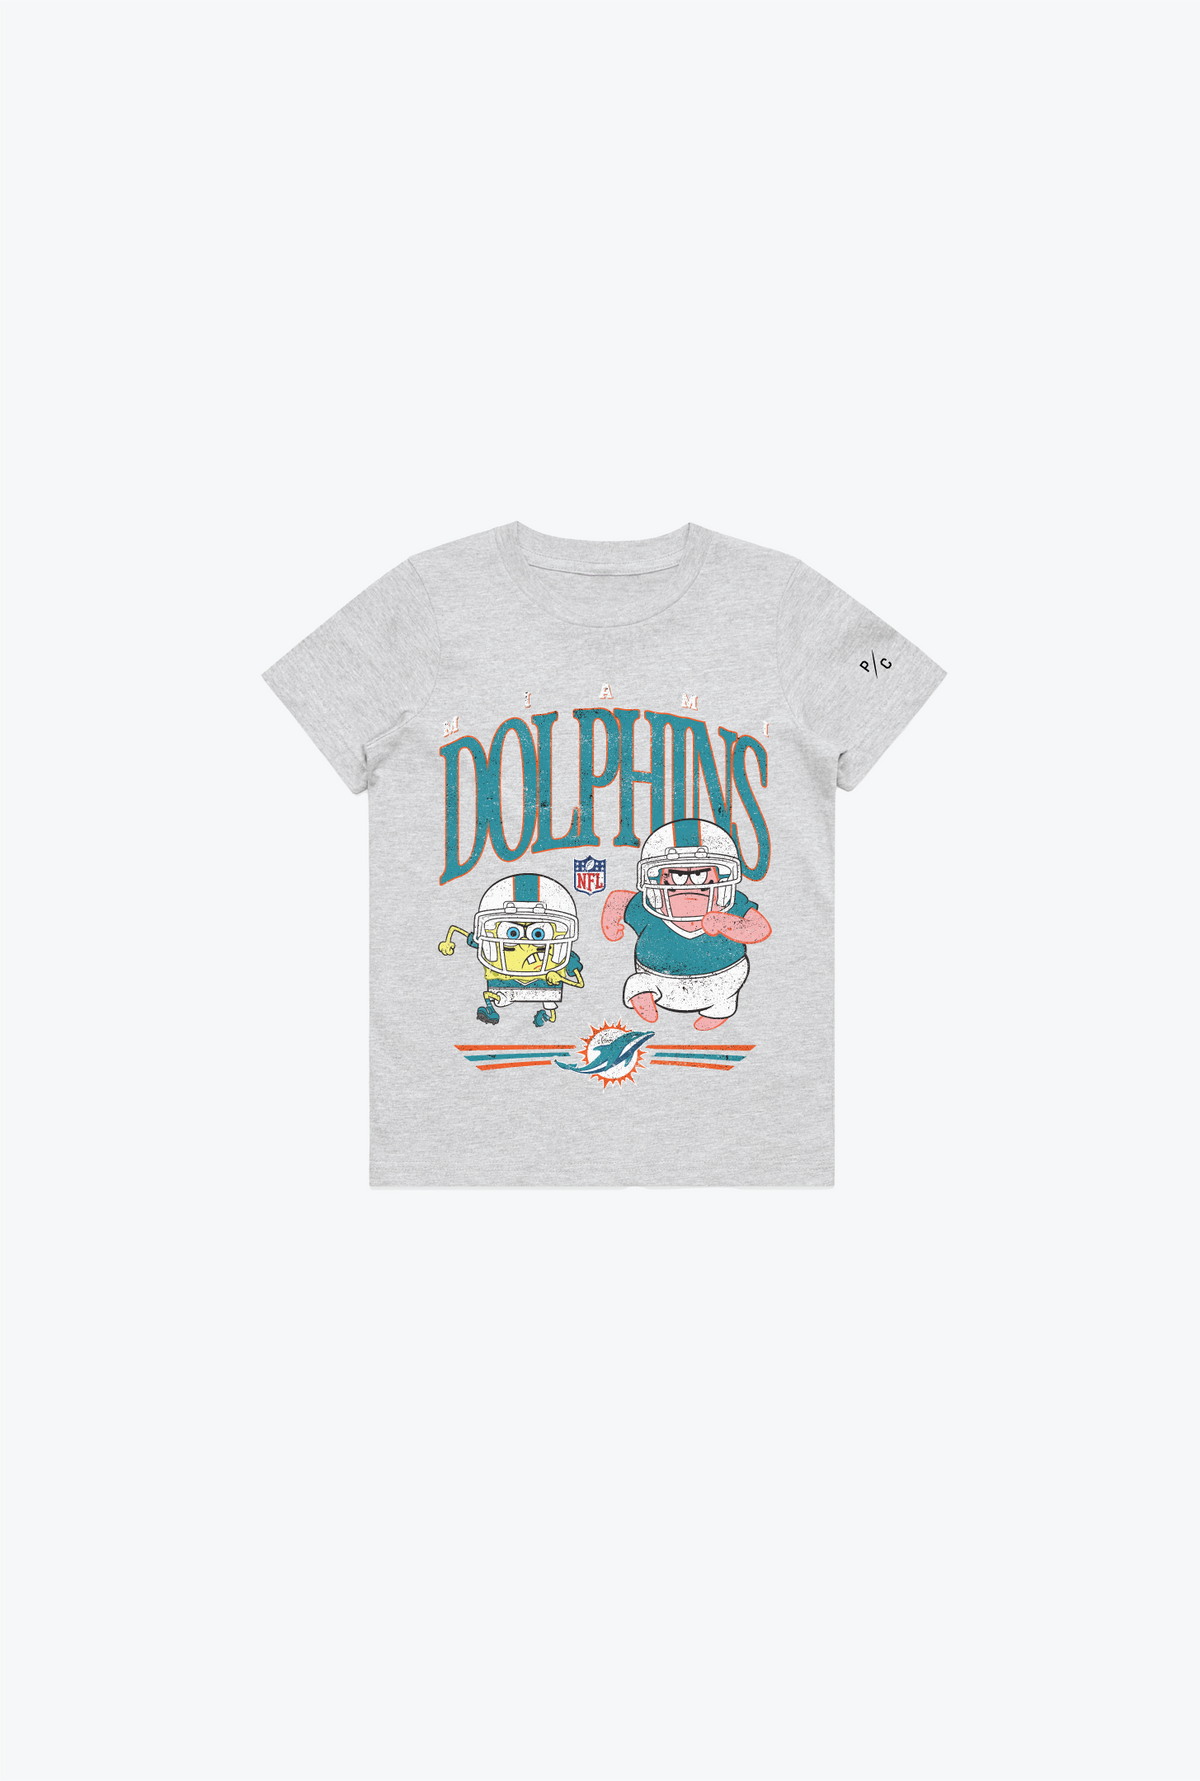 Spongebob & Patrick Rush Kids T-Shirt - Miami Dolphns